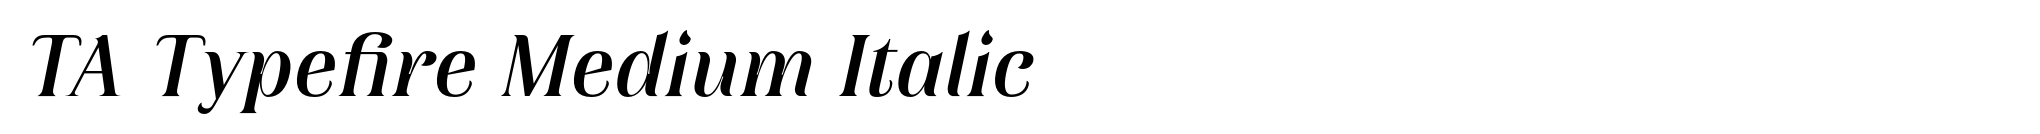 TA Typefire Medium Italic image